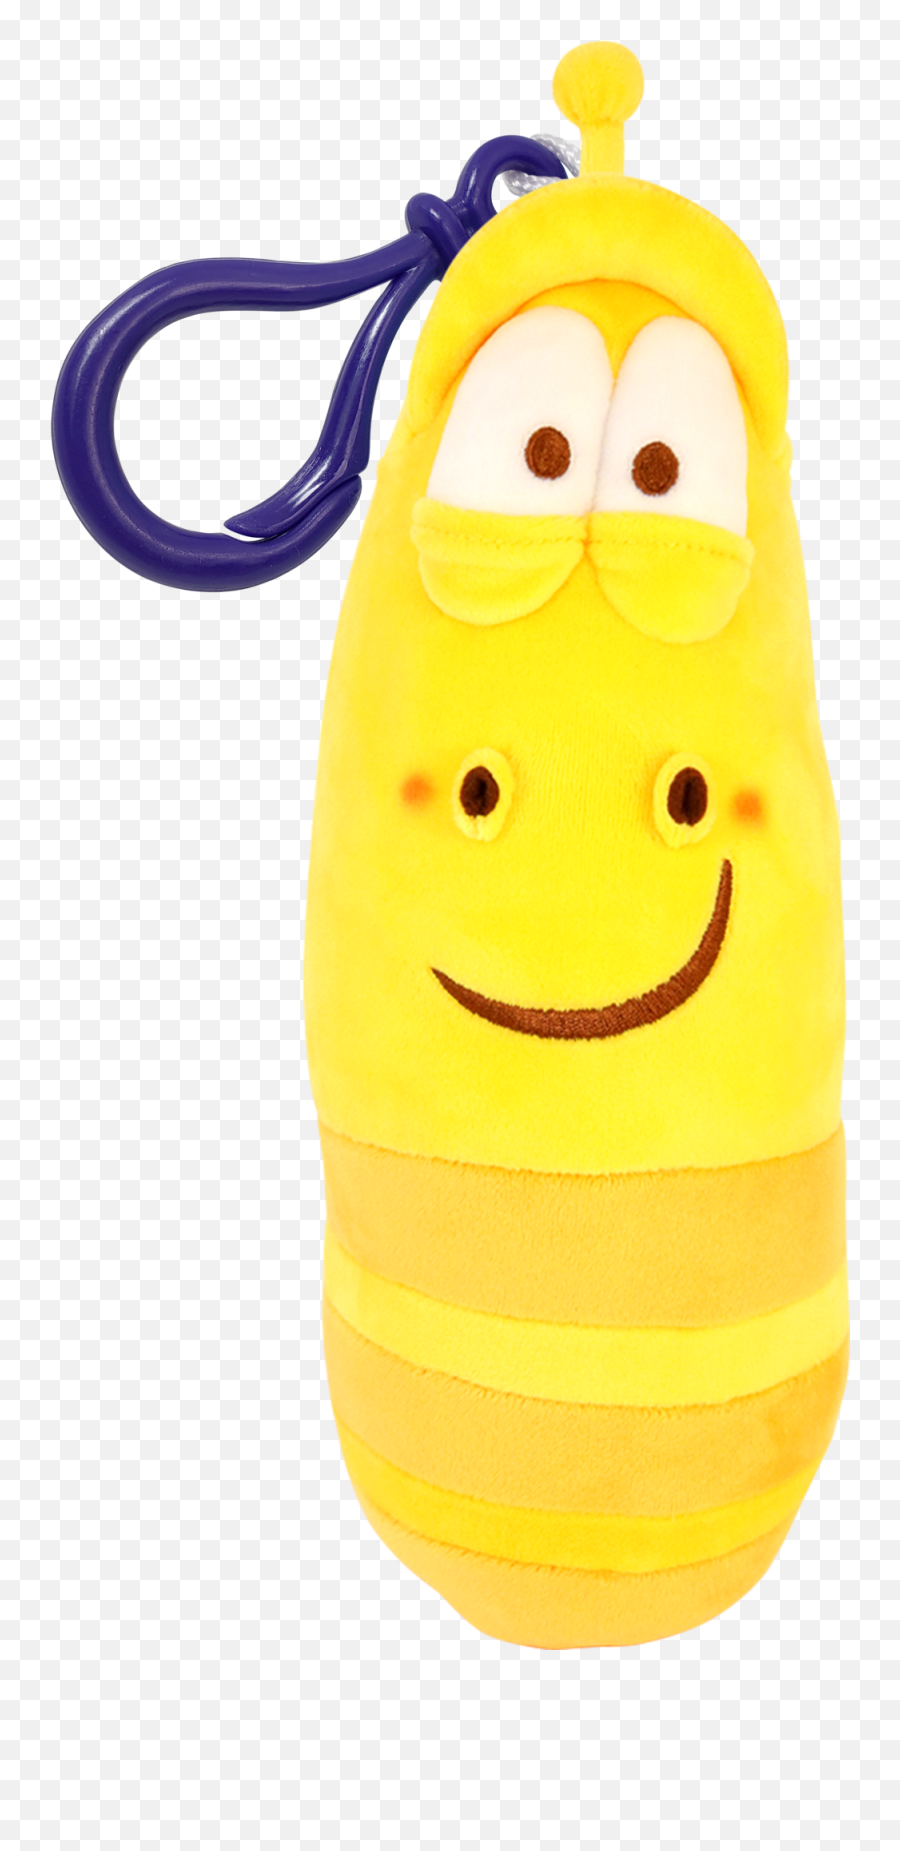 Larva Commonwealth Toy Novelty Co Emoji,Emoticon Plush